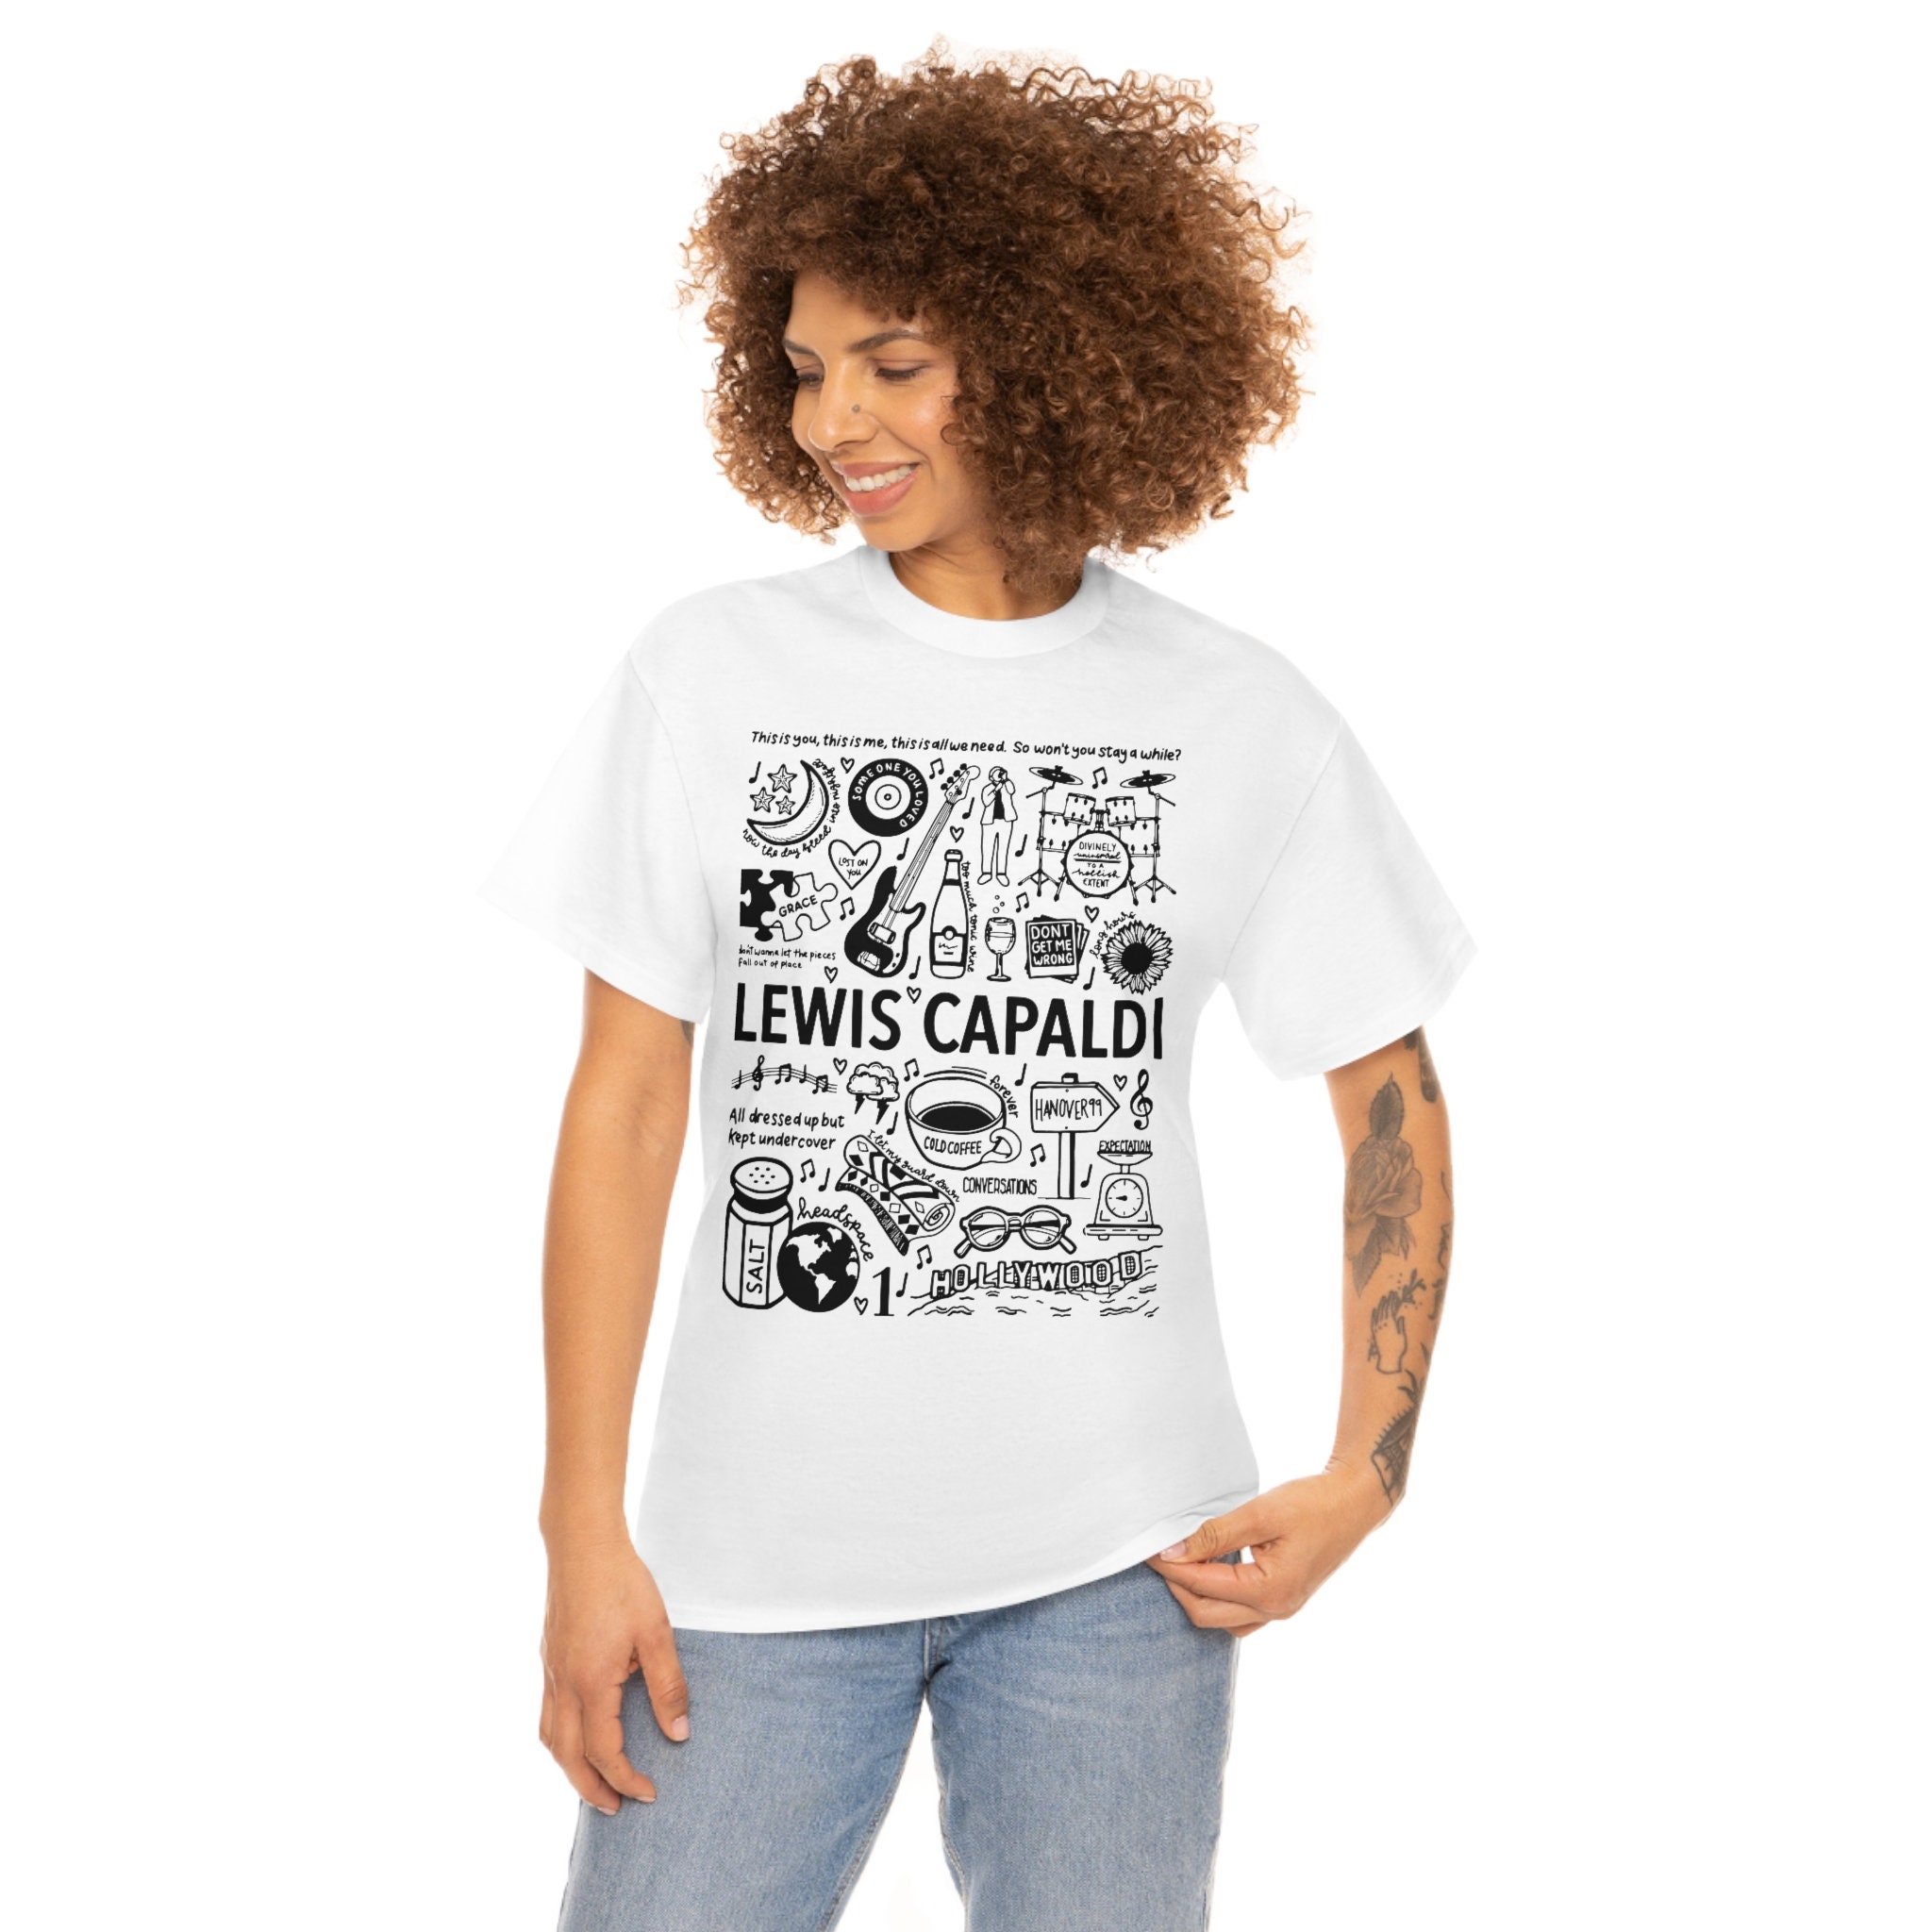 Discover Lewis Capaldi Shirt, Lewis Capaldi T-shirt, Lewis Capaldi Unisex T-shirt